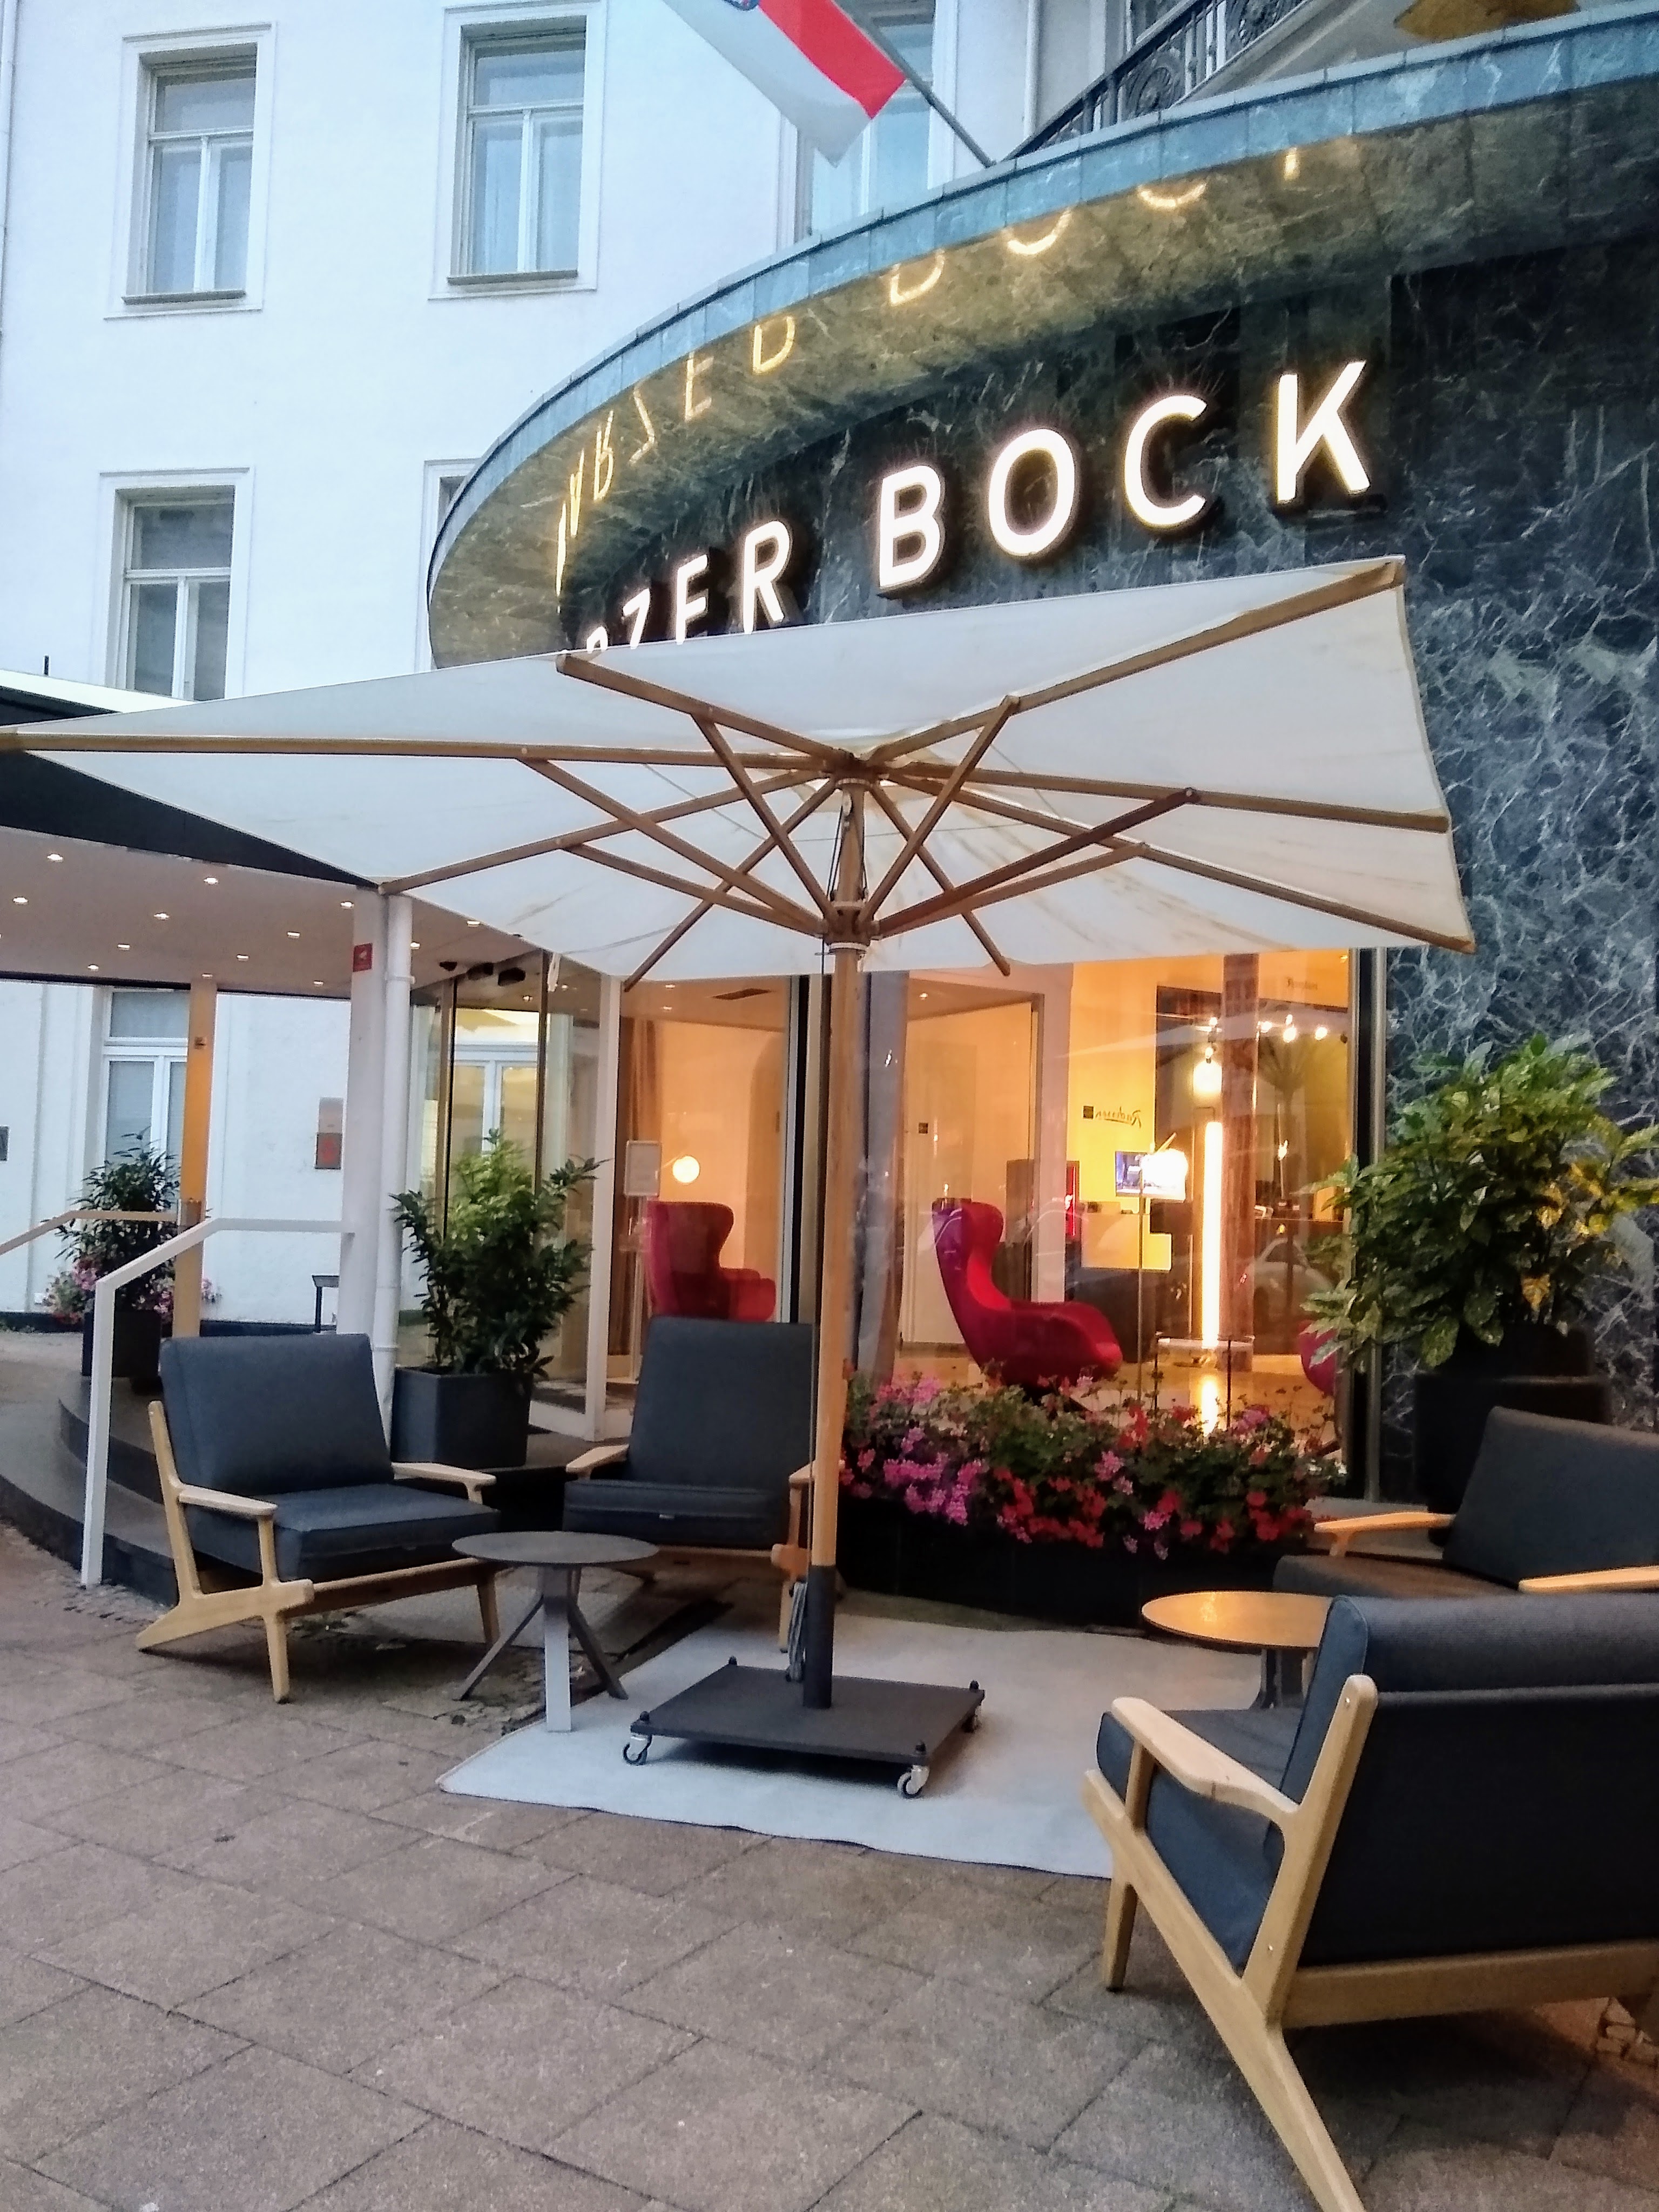 Schwarzer Bock Hotel front seating